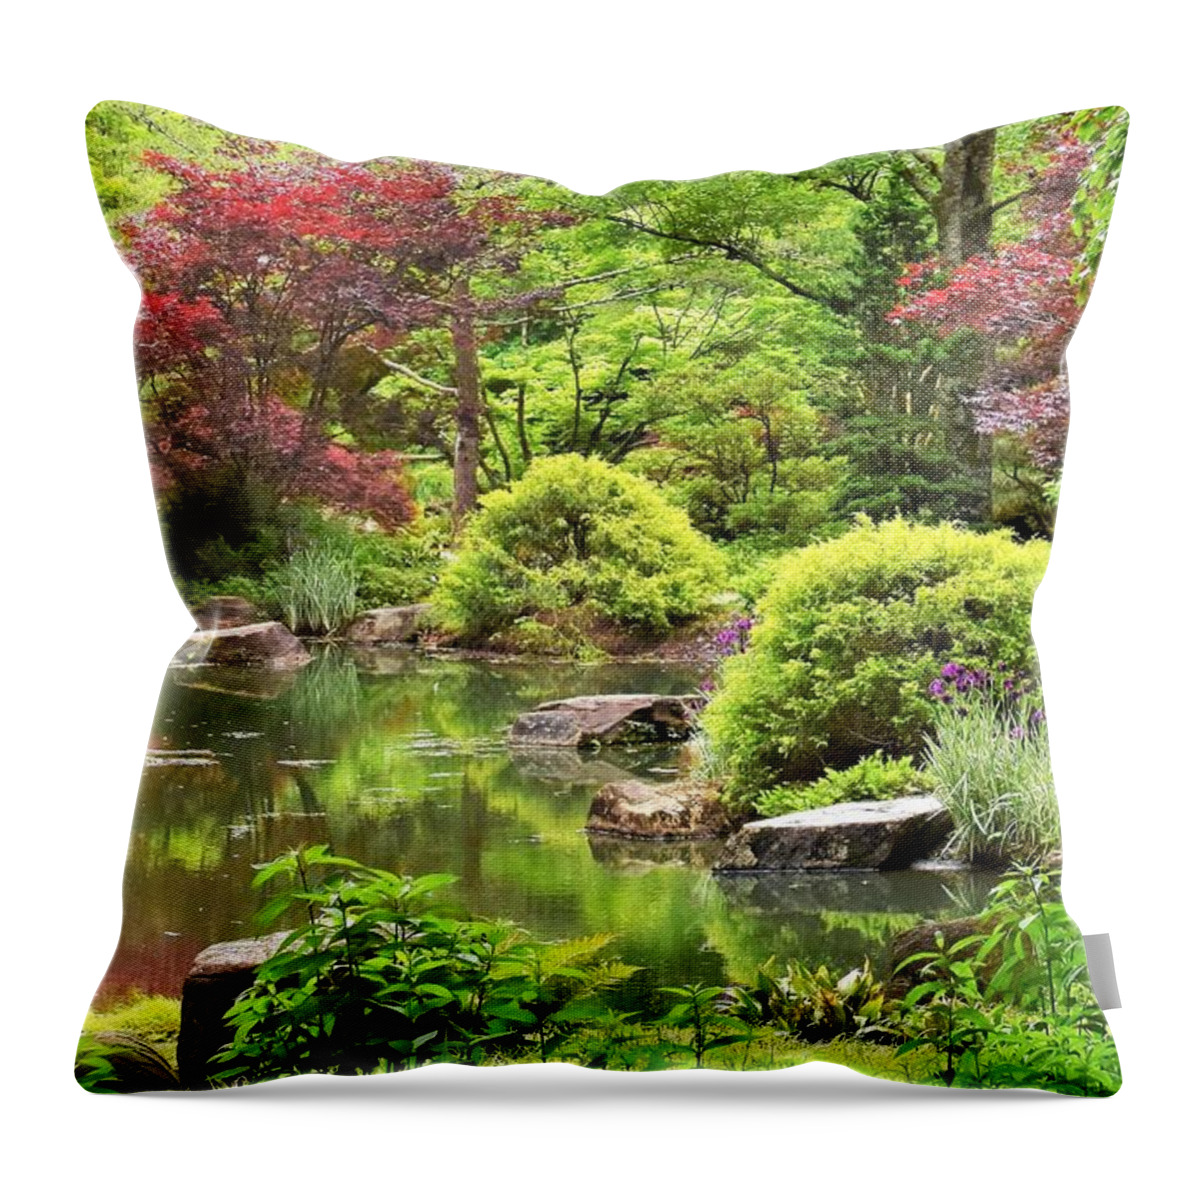 Japanese Gardens Throw Pillow featuring the photograph Japanese Gardens by Mary Ann Artz